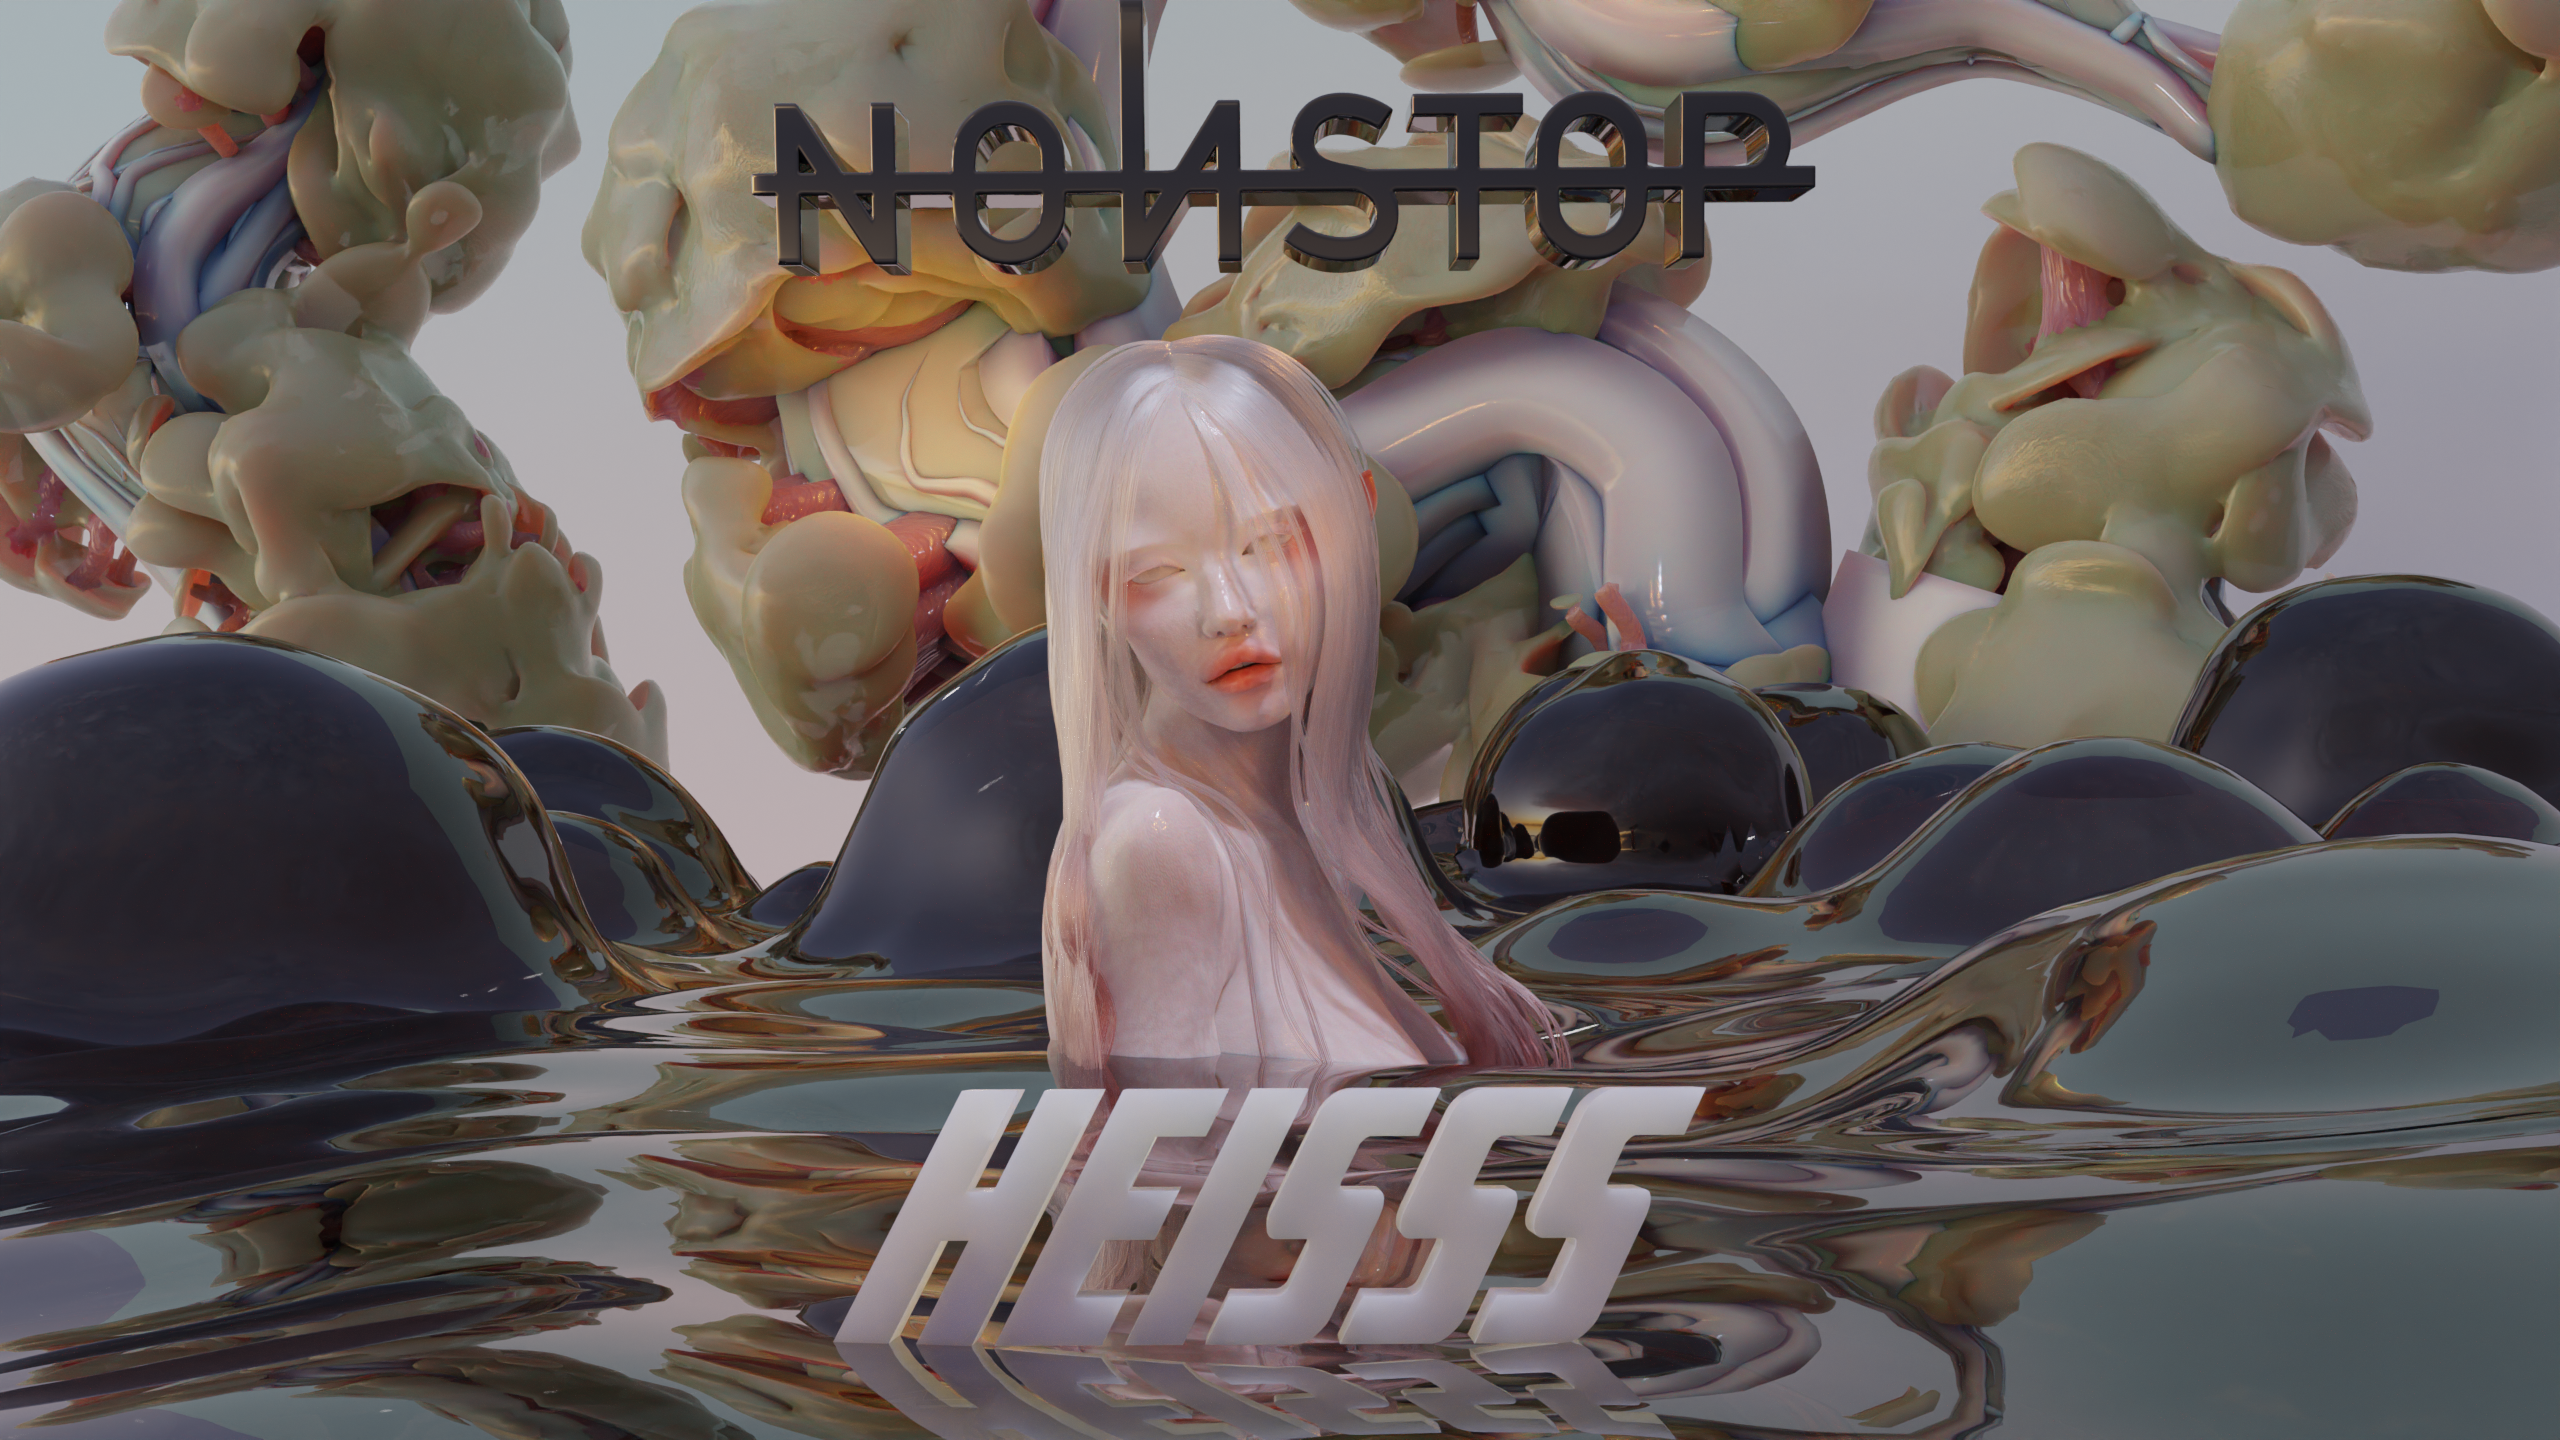 NONSTOP x HEISSS with Nene H, X CLUB., DJ SWISHERMAN, Kim She, DJ SEX and many more - フライヤー表